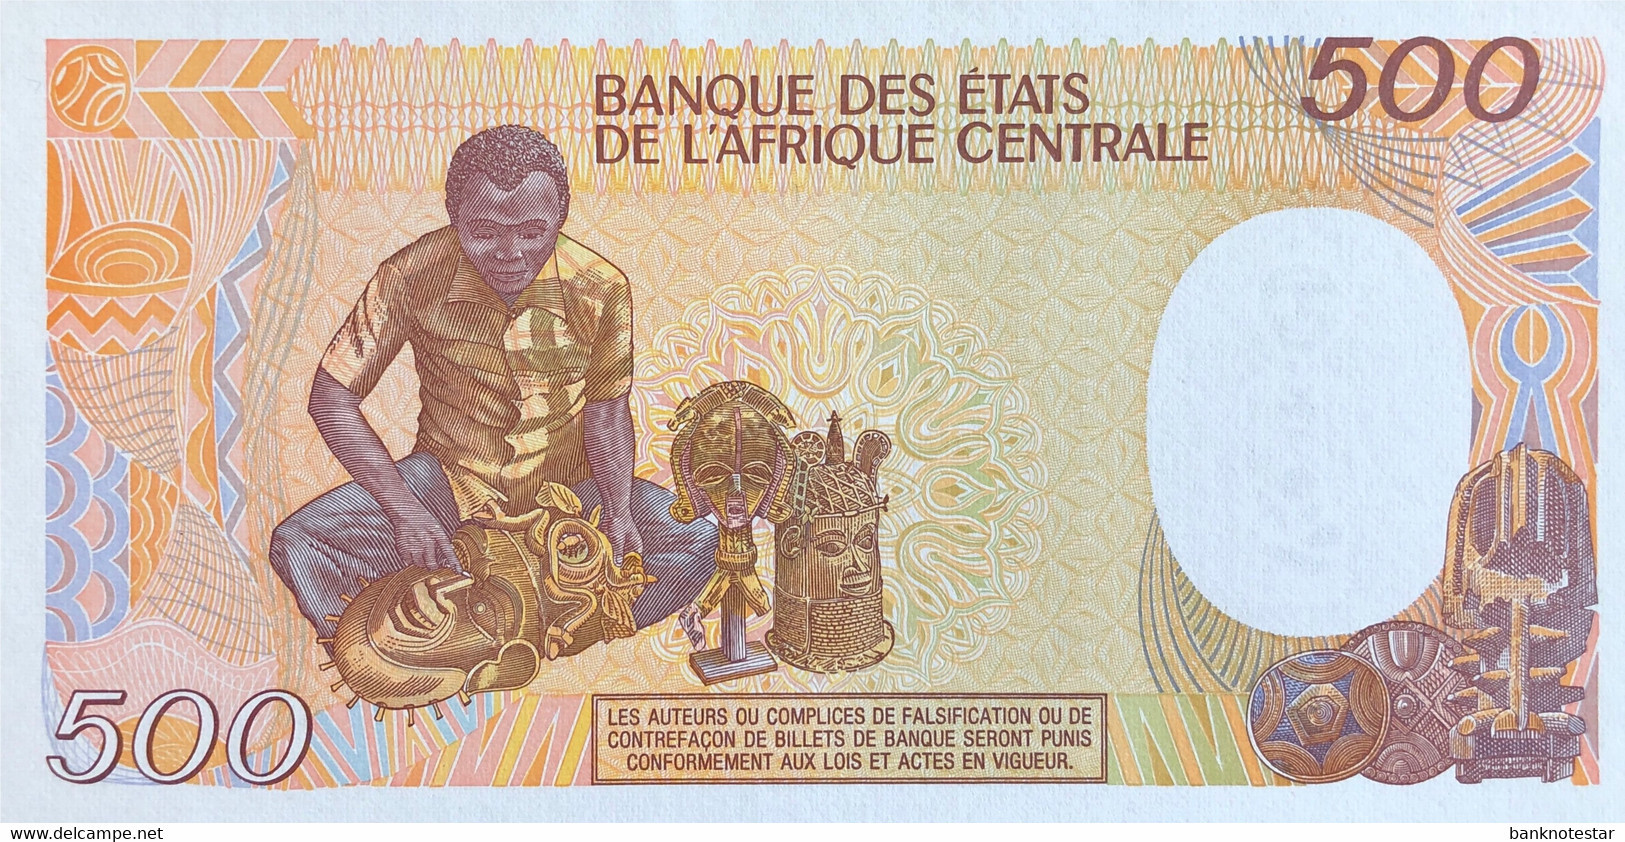 Congo Republic 500 Francs, P-8d (1.1.1991) - UNC - Republic Of Congo (Congo-Brazzaville)